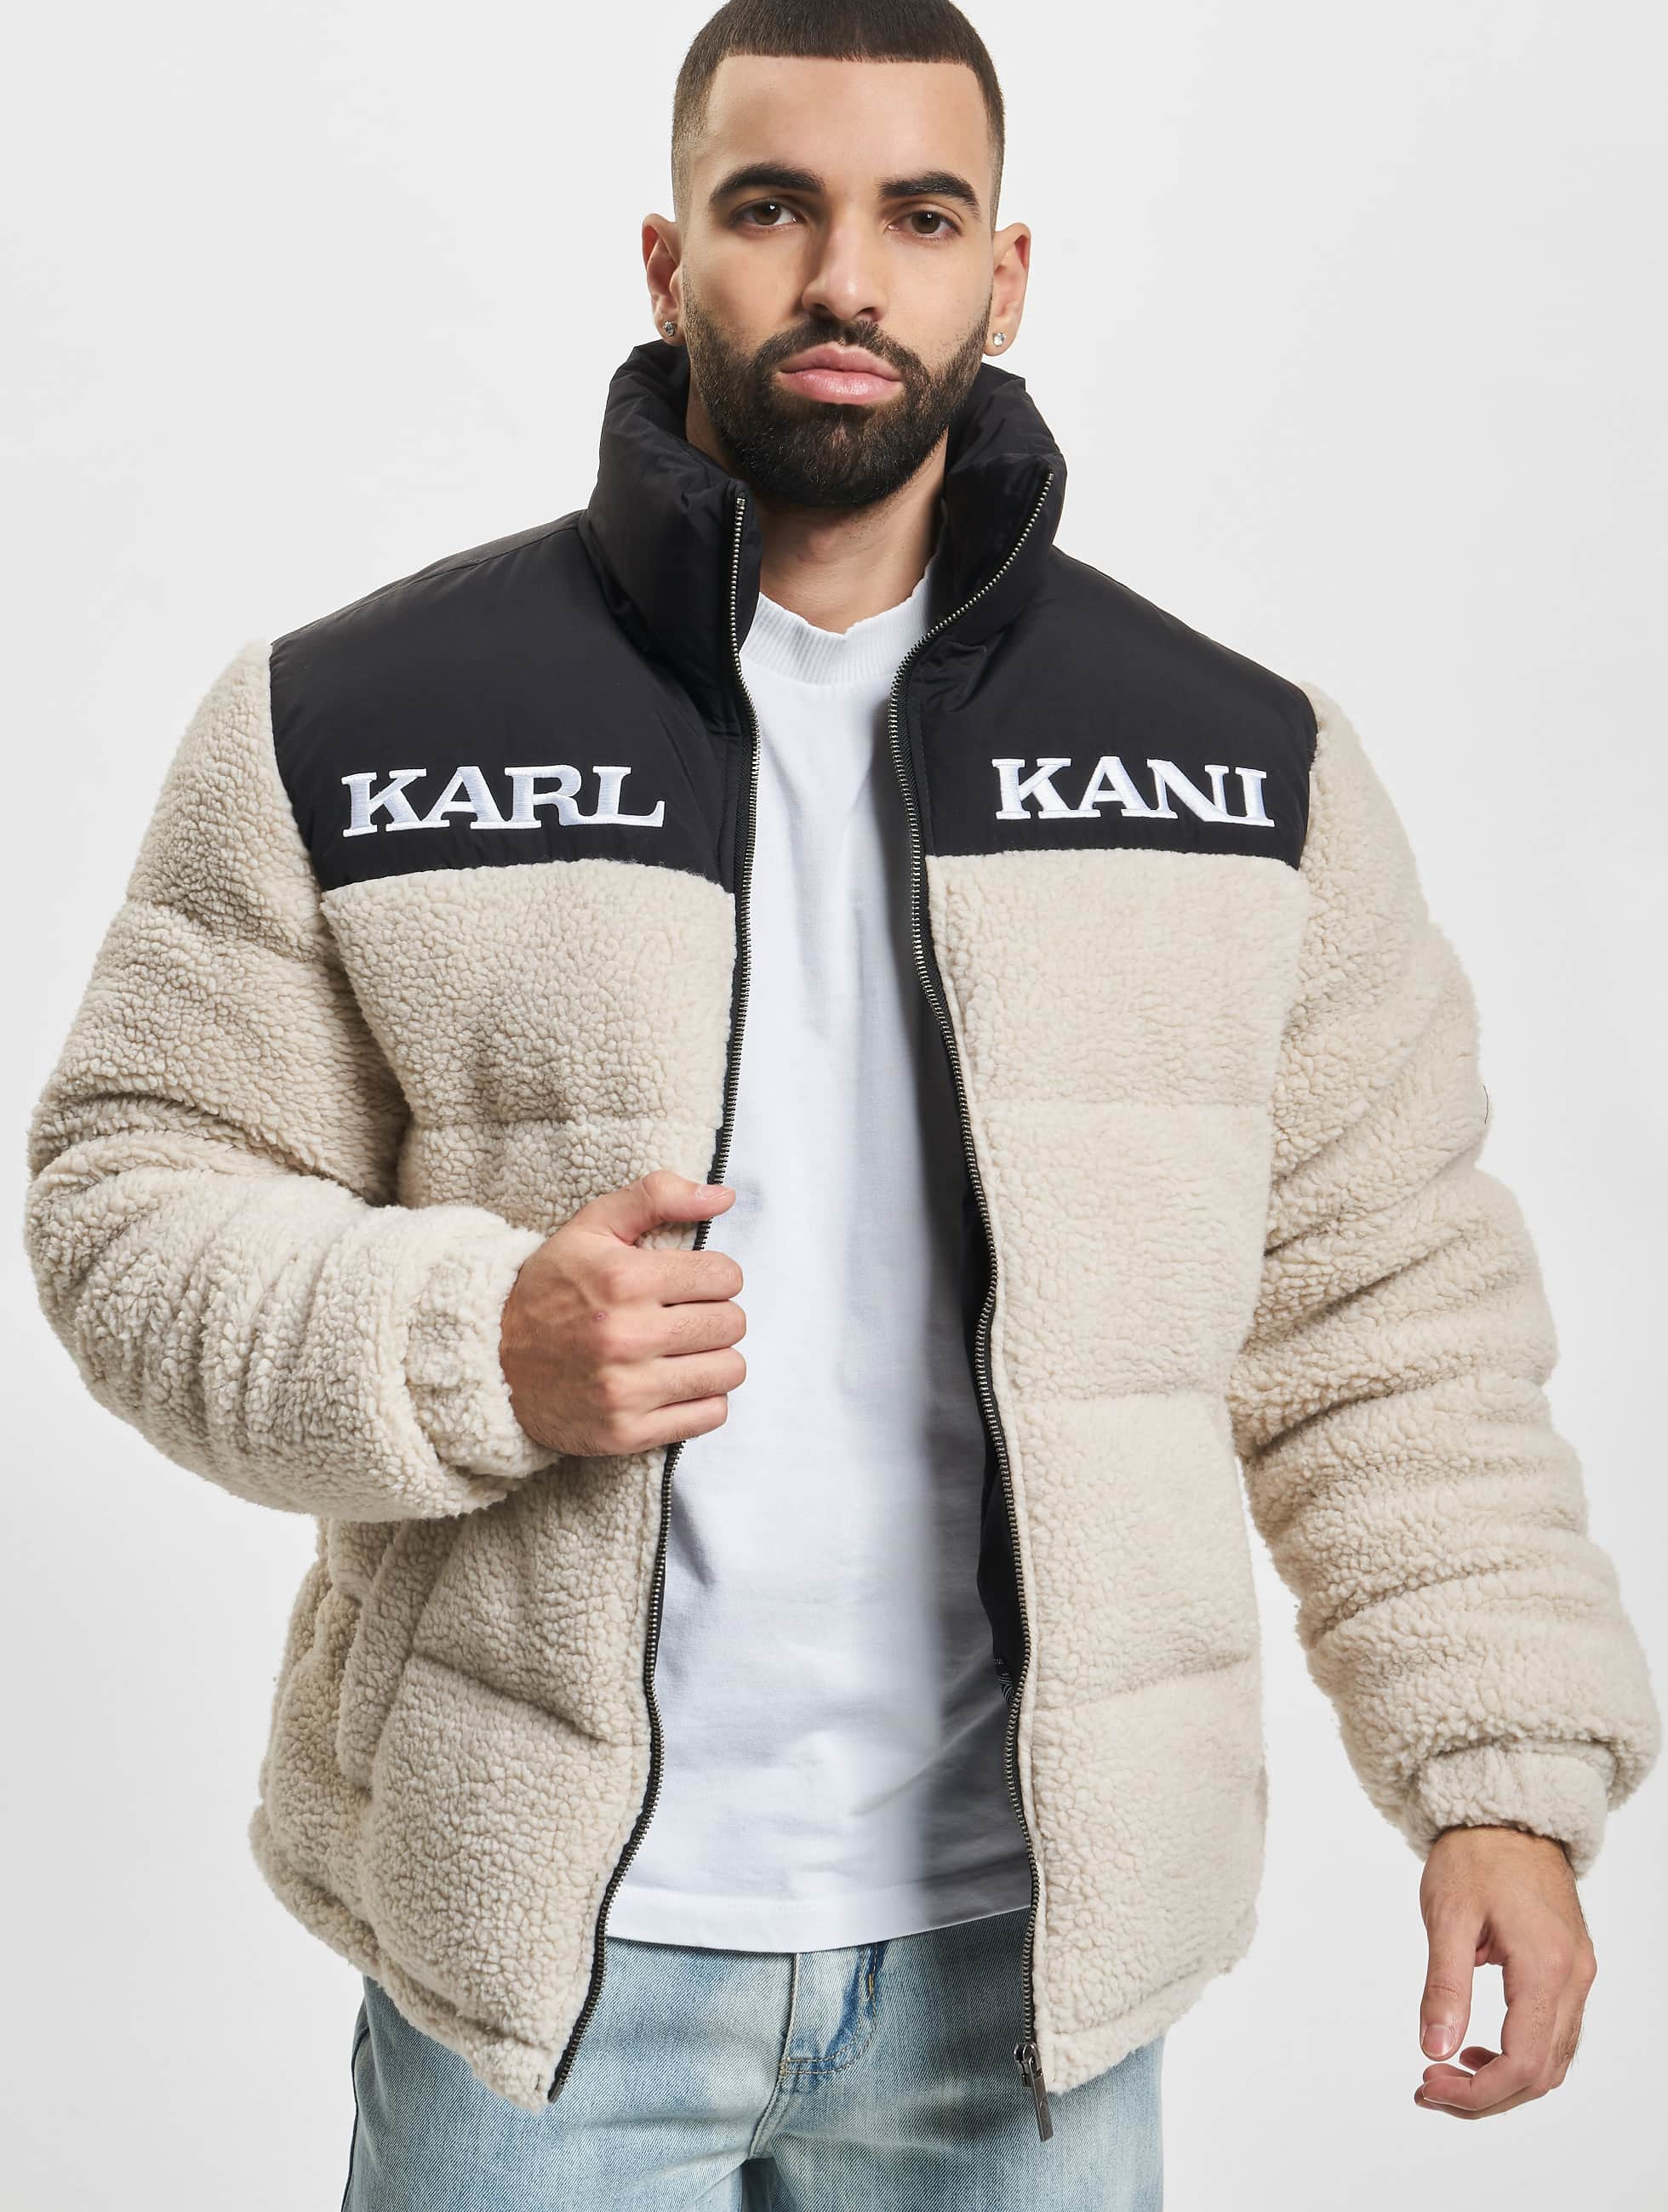 Actualizar 96+ imagen ropa karl kani